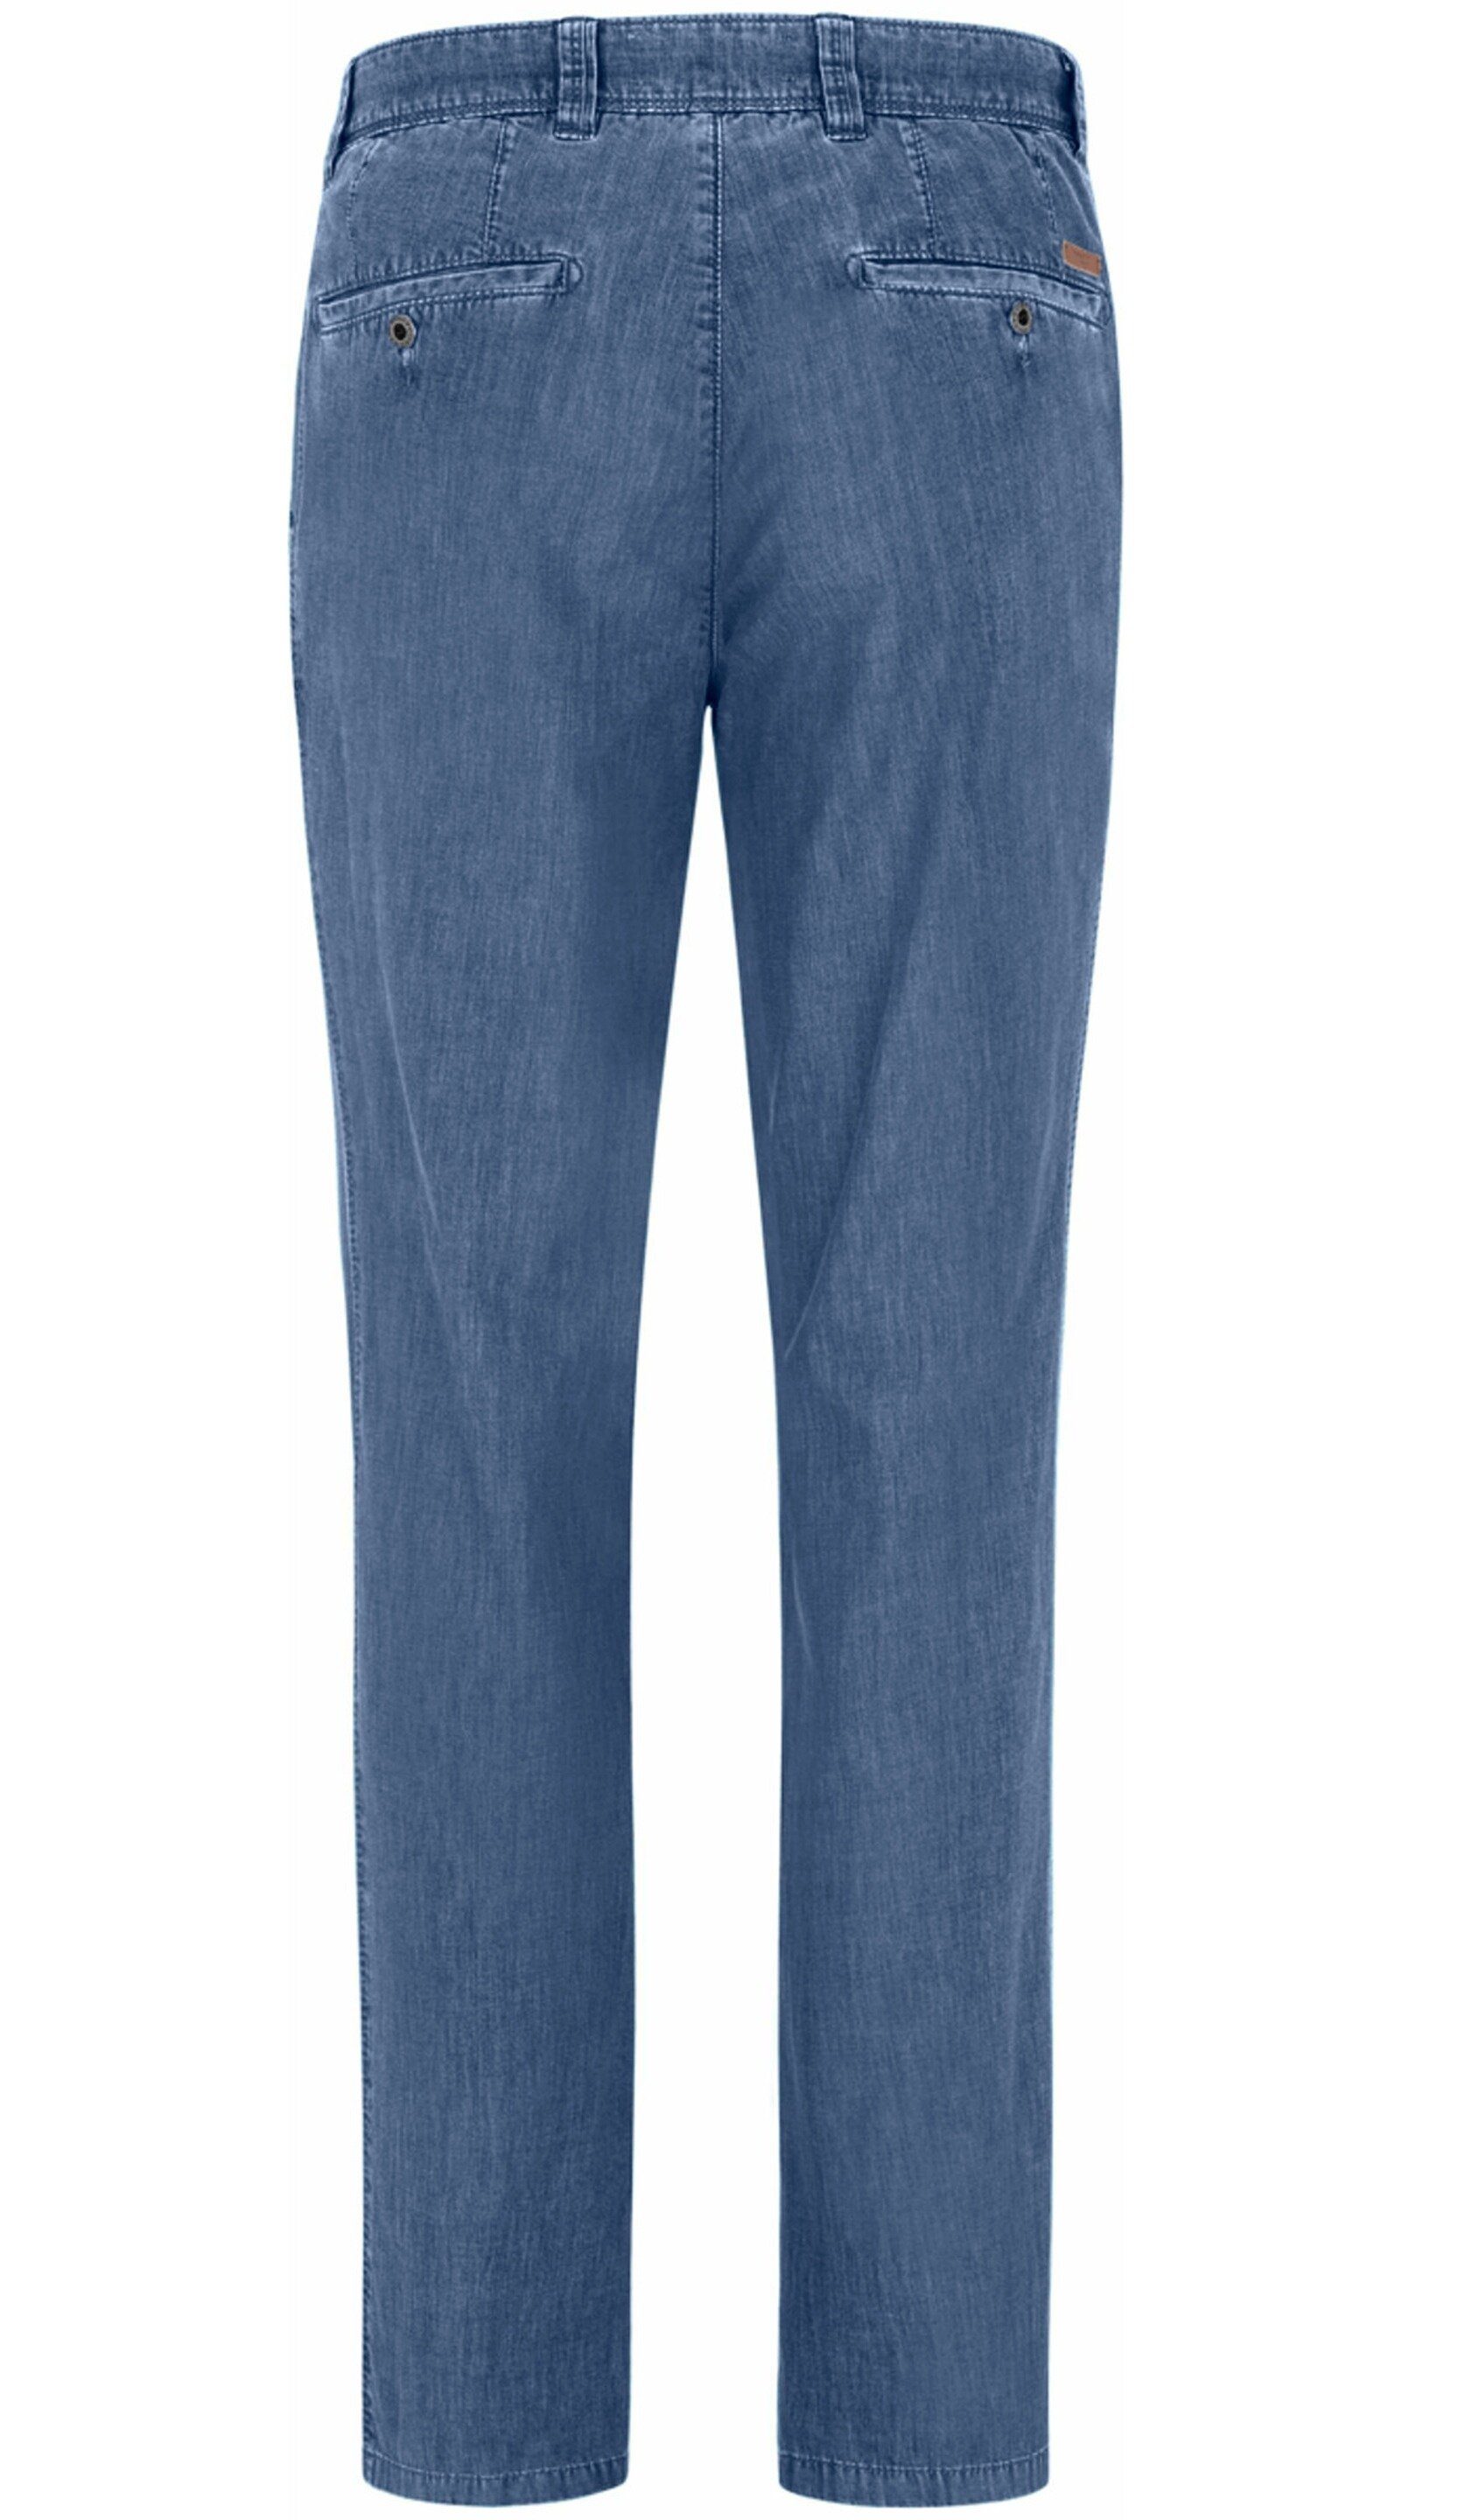 EUREX BRAX Light EUREX Denim Style Jeans BY Flat-Front-Jeans Bequeme blau John BRAX JOHN, by Pima